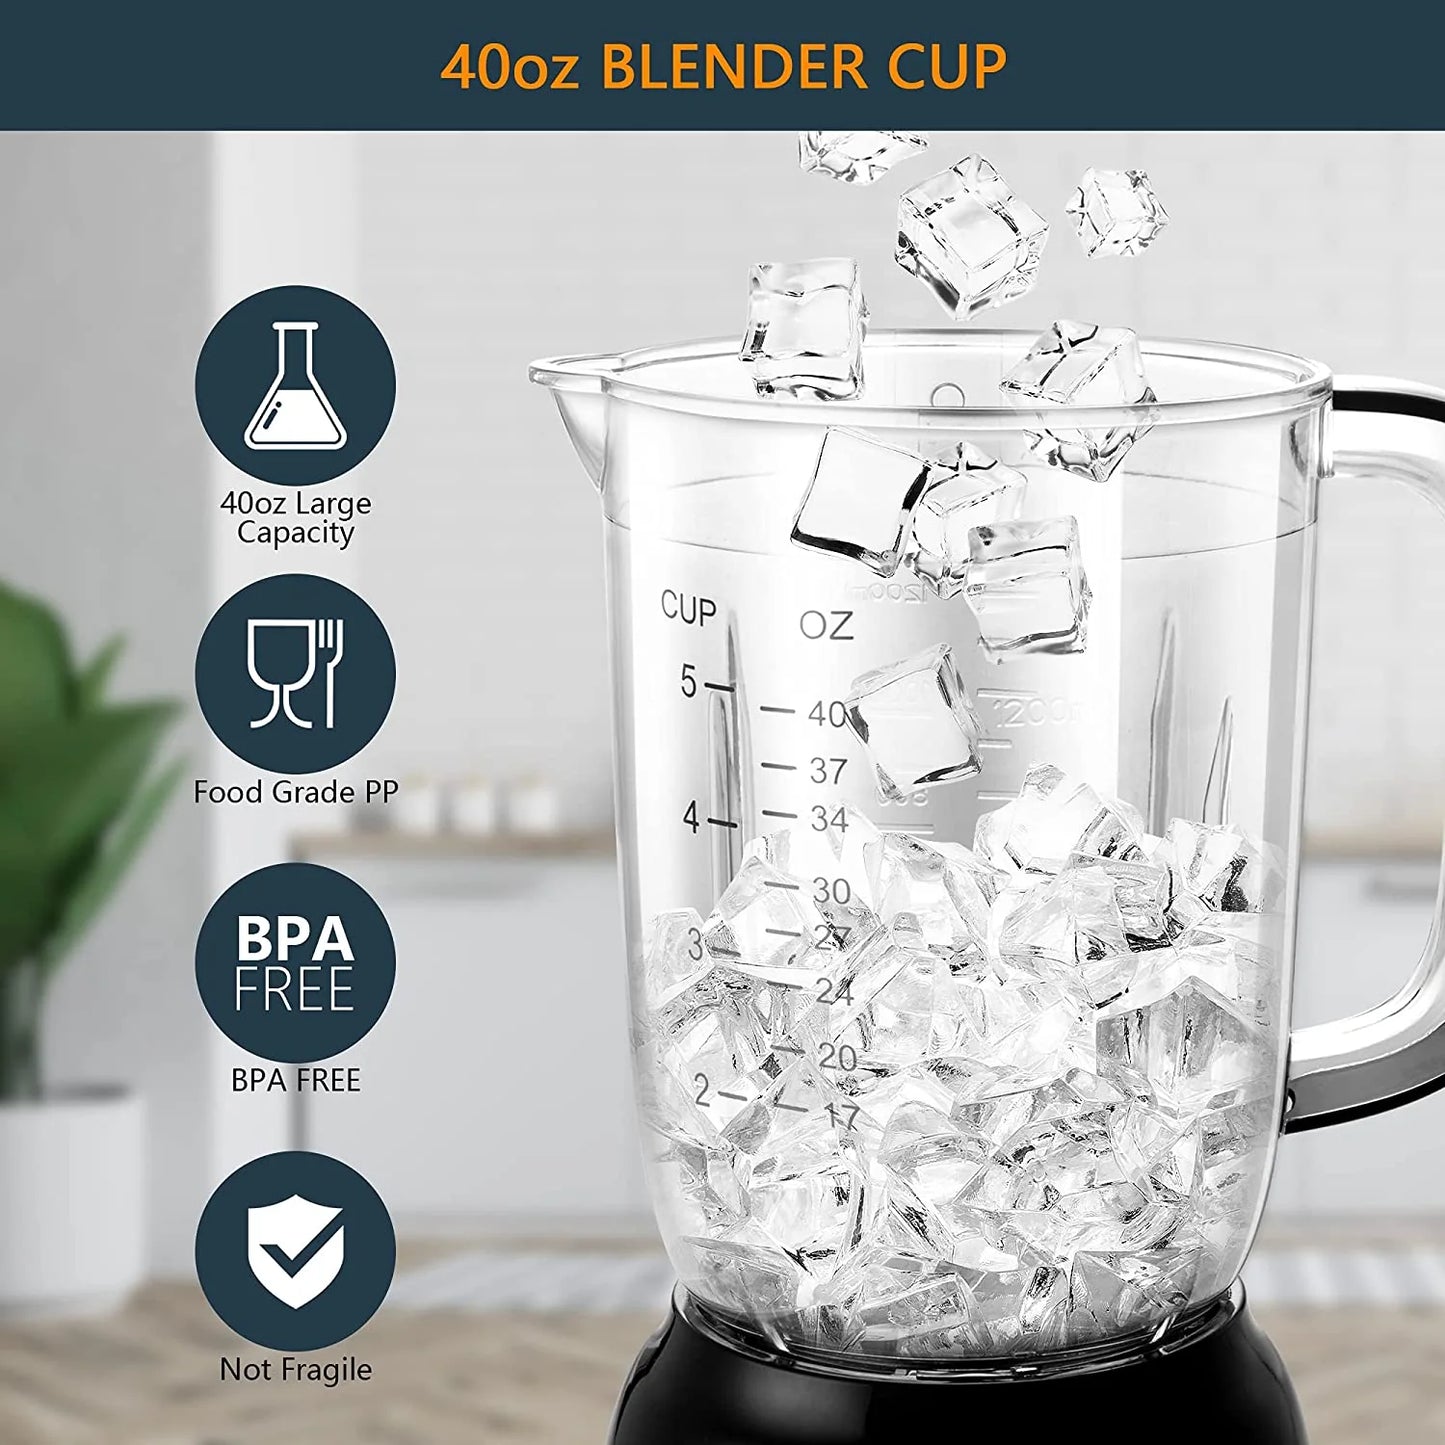 Bear Countertop Blender, LLJ-B12K1, 40oz Blender Cup, 700W 3 Speed